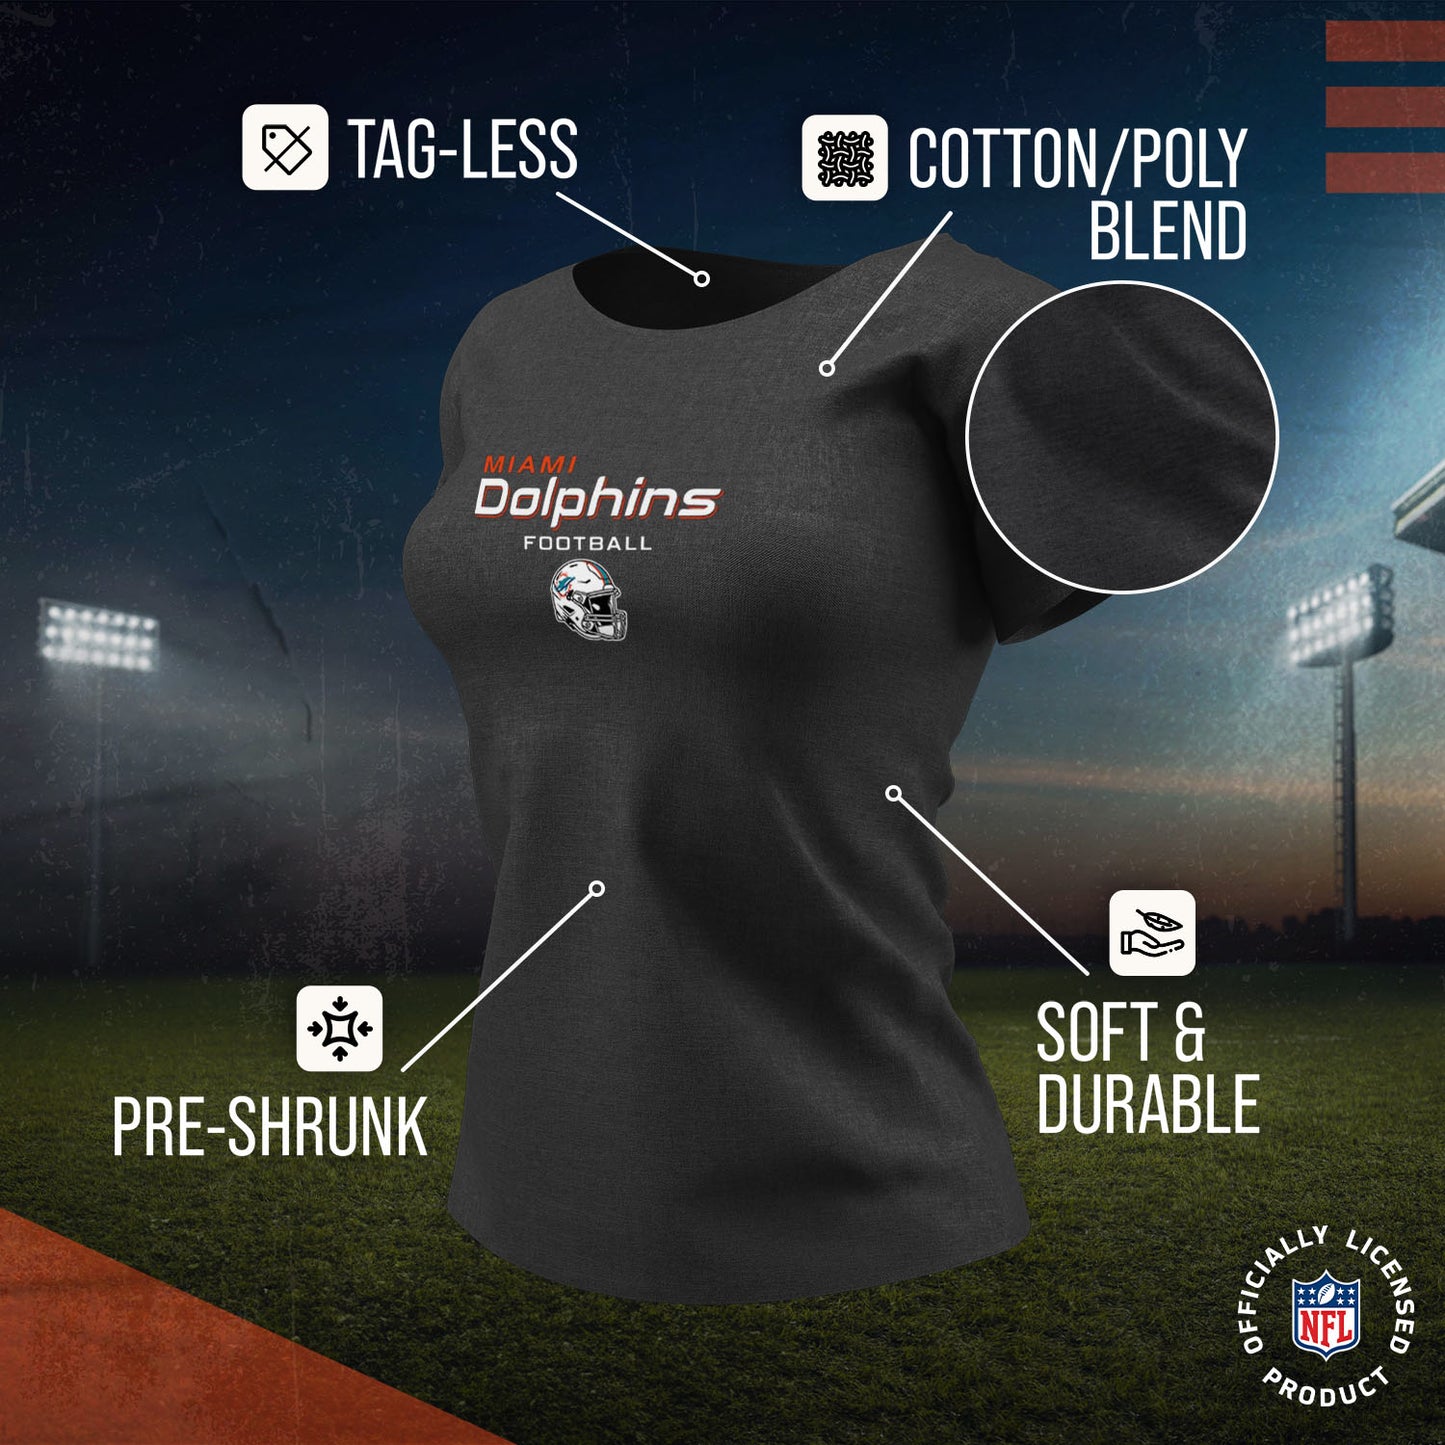 Miami Dolphins Women's NFL Football Helmet Short Sleeve Tagless T-Shirt - Charcoal